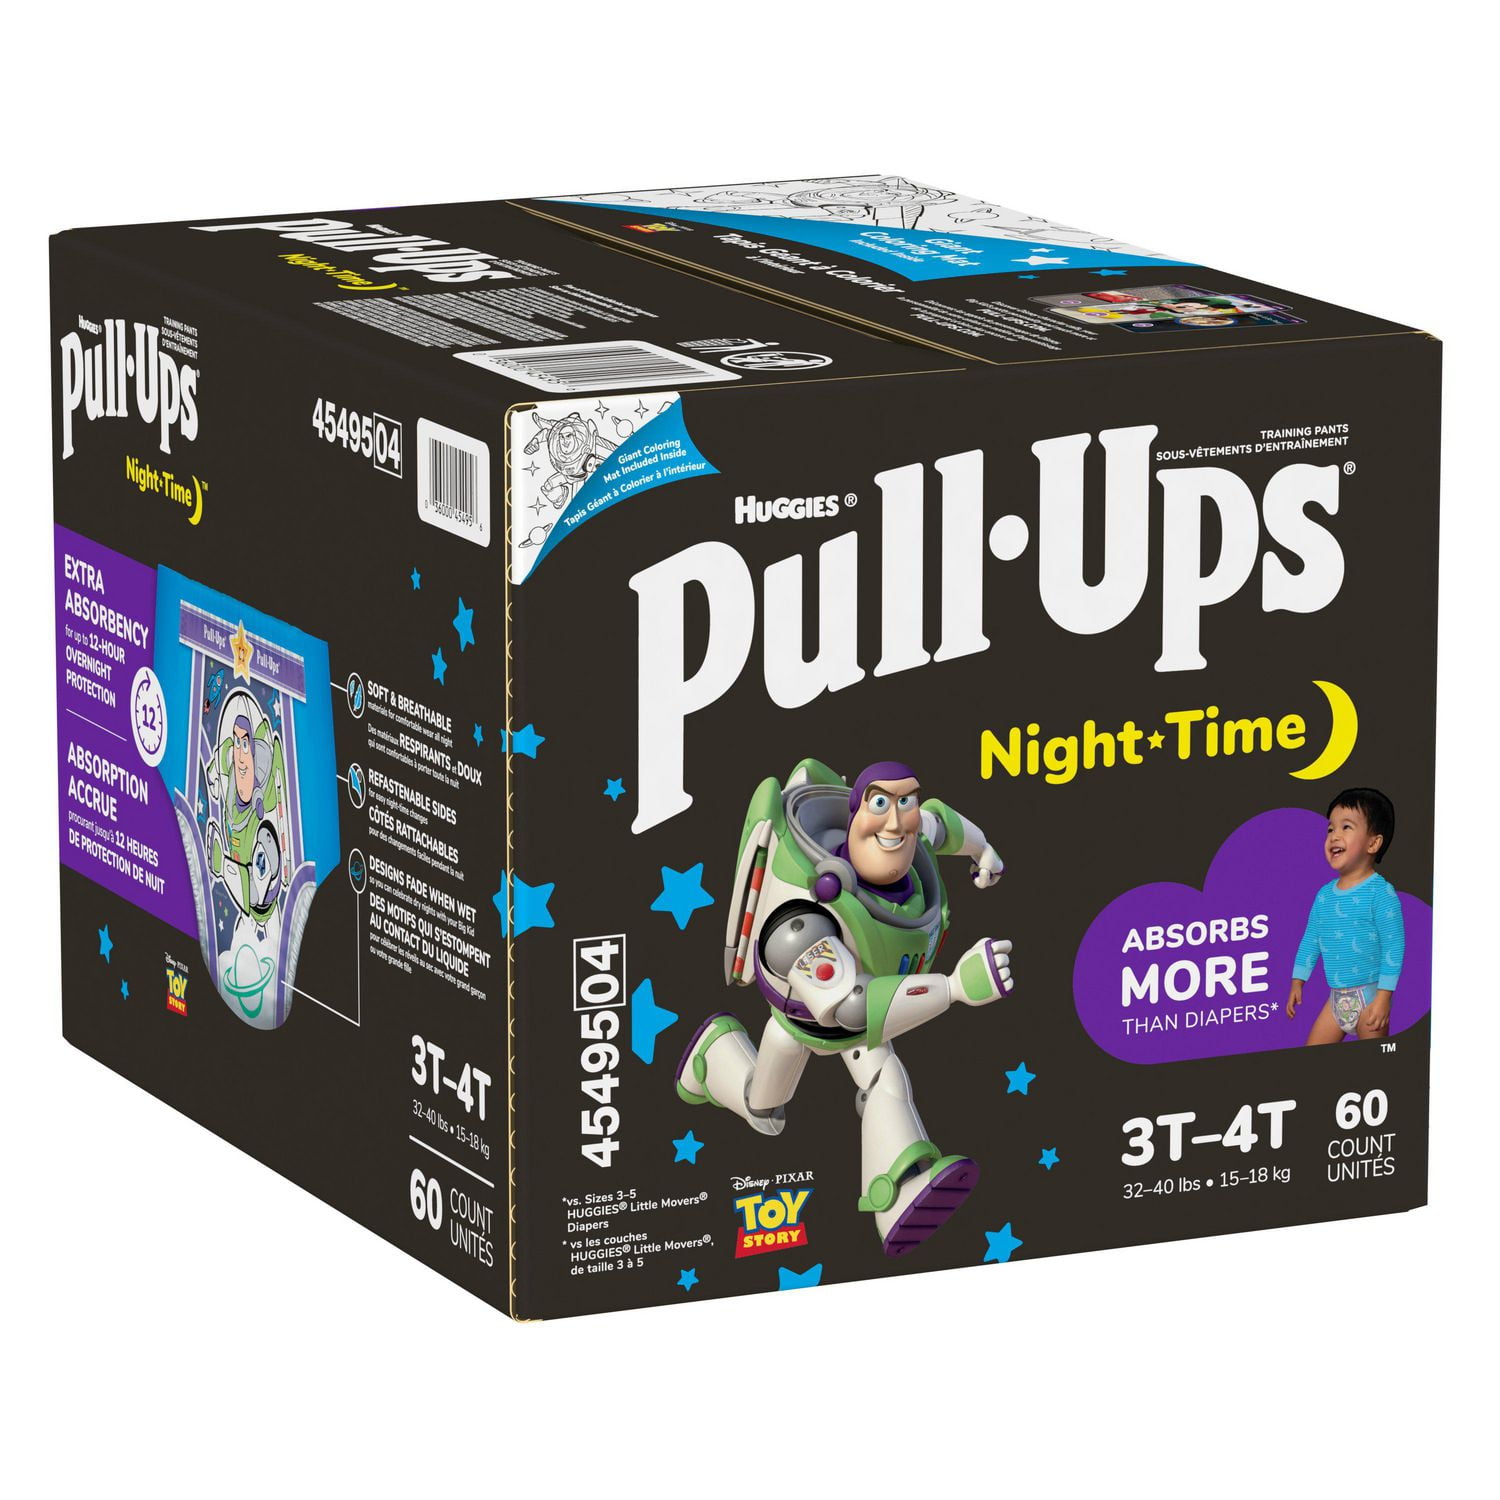 Huggies® Pull-Ups® Night Time Nappy Pants, Boy Size 6, 18 Pants